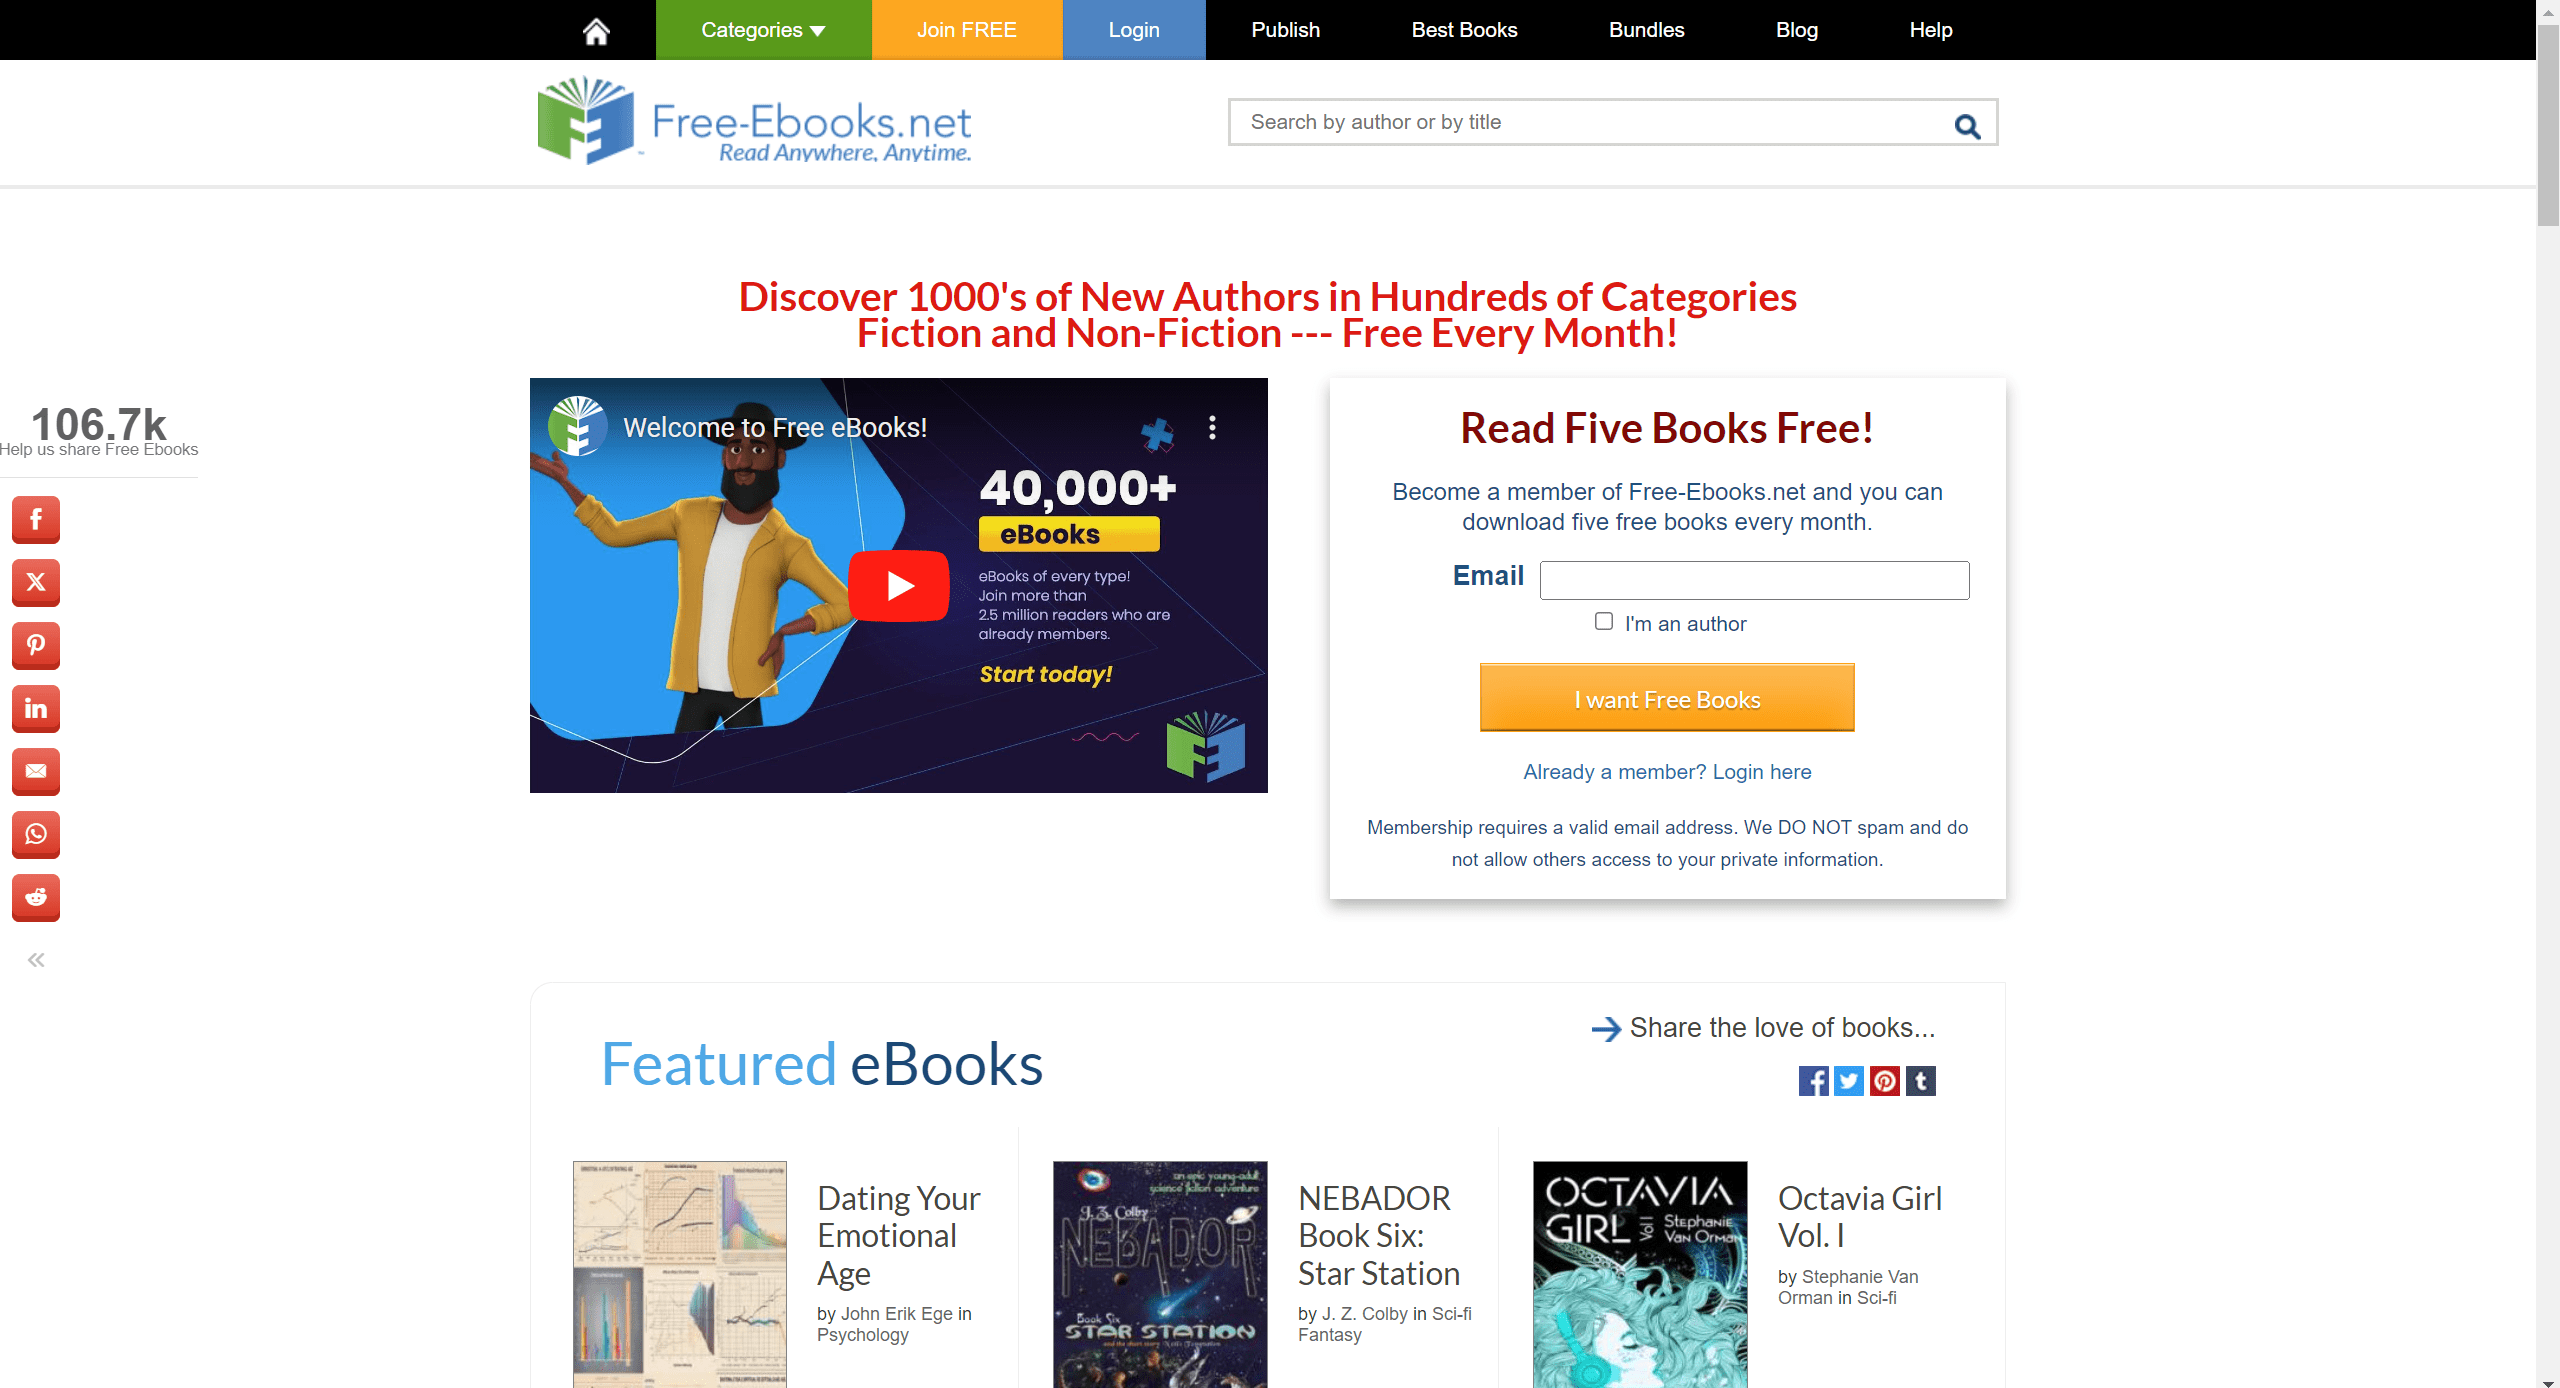 9. Free-eBooks.net